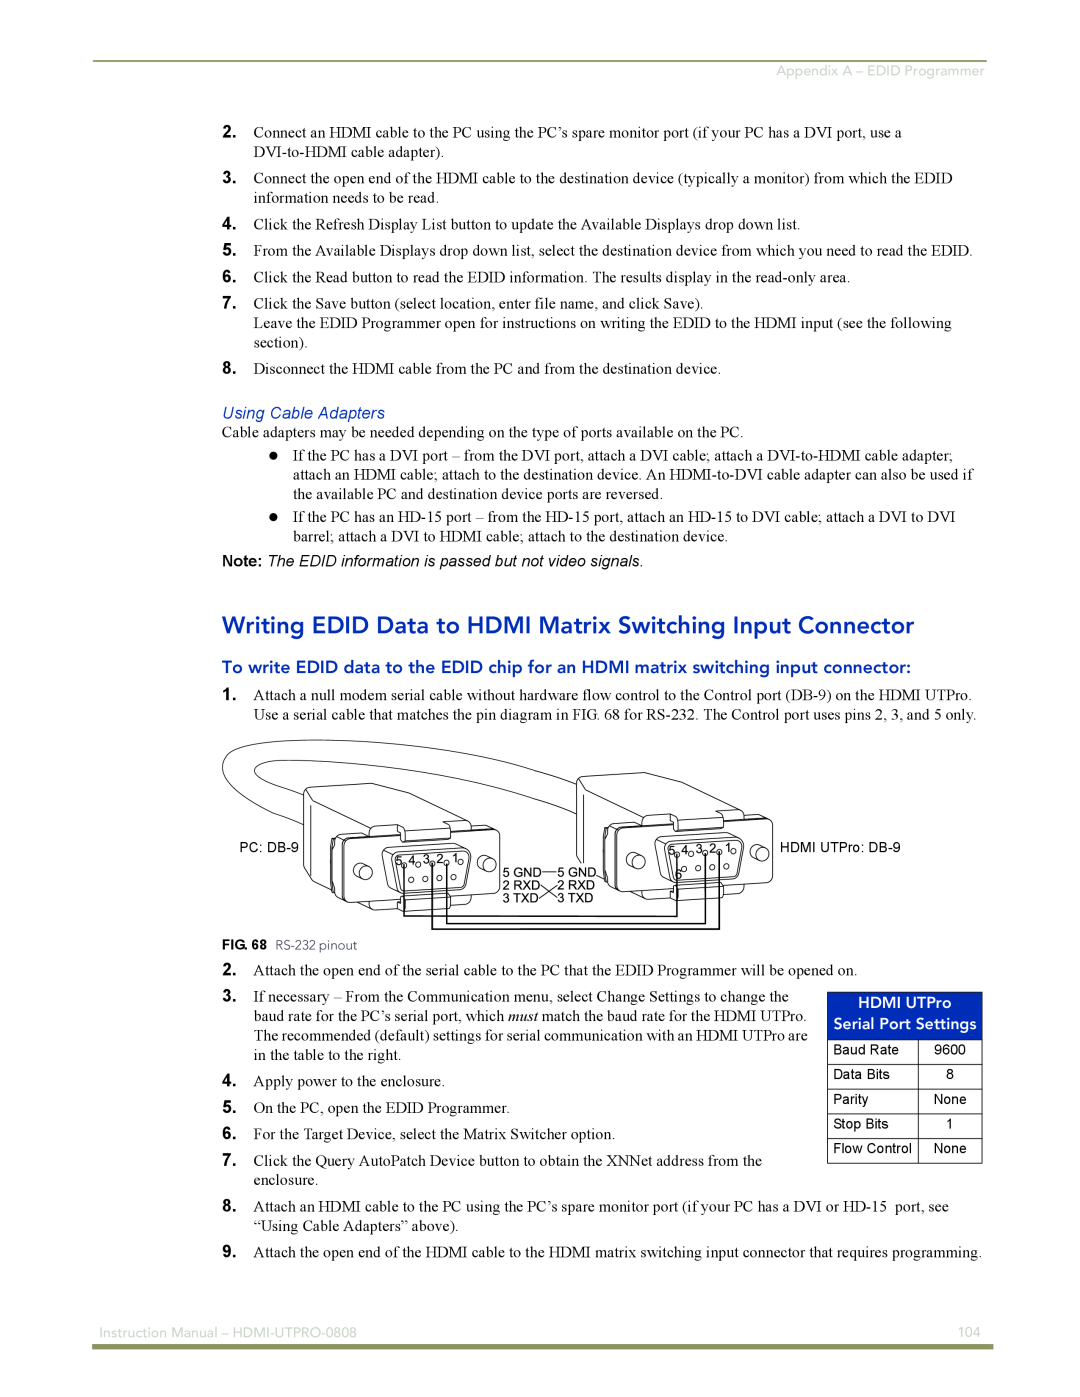 AMX HDMI-UTPRO-0808 instruction manual Using Cable Adapters, HDMI UTPro, Serial Port Settings 